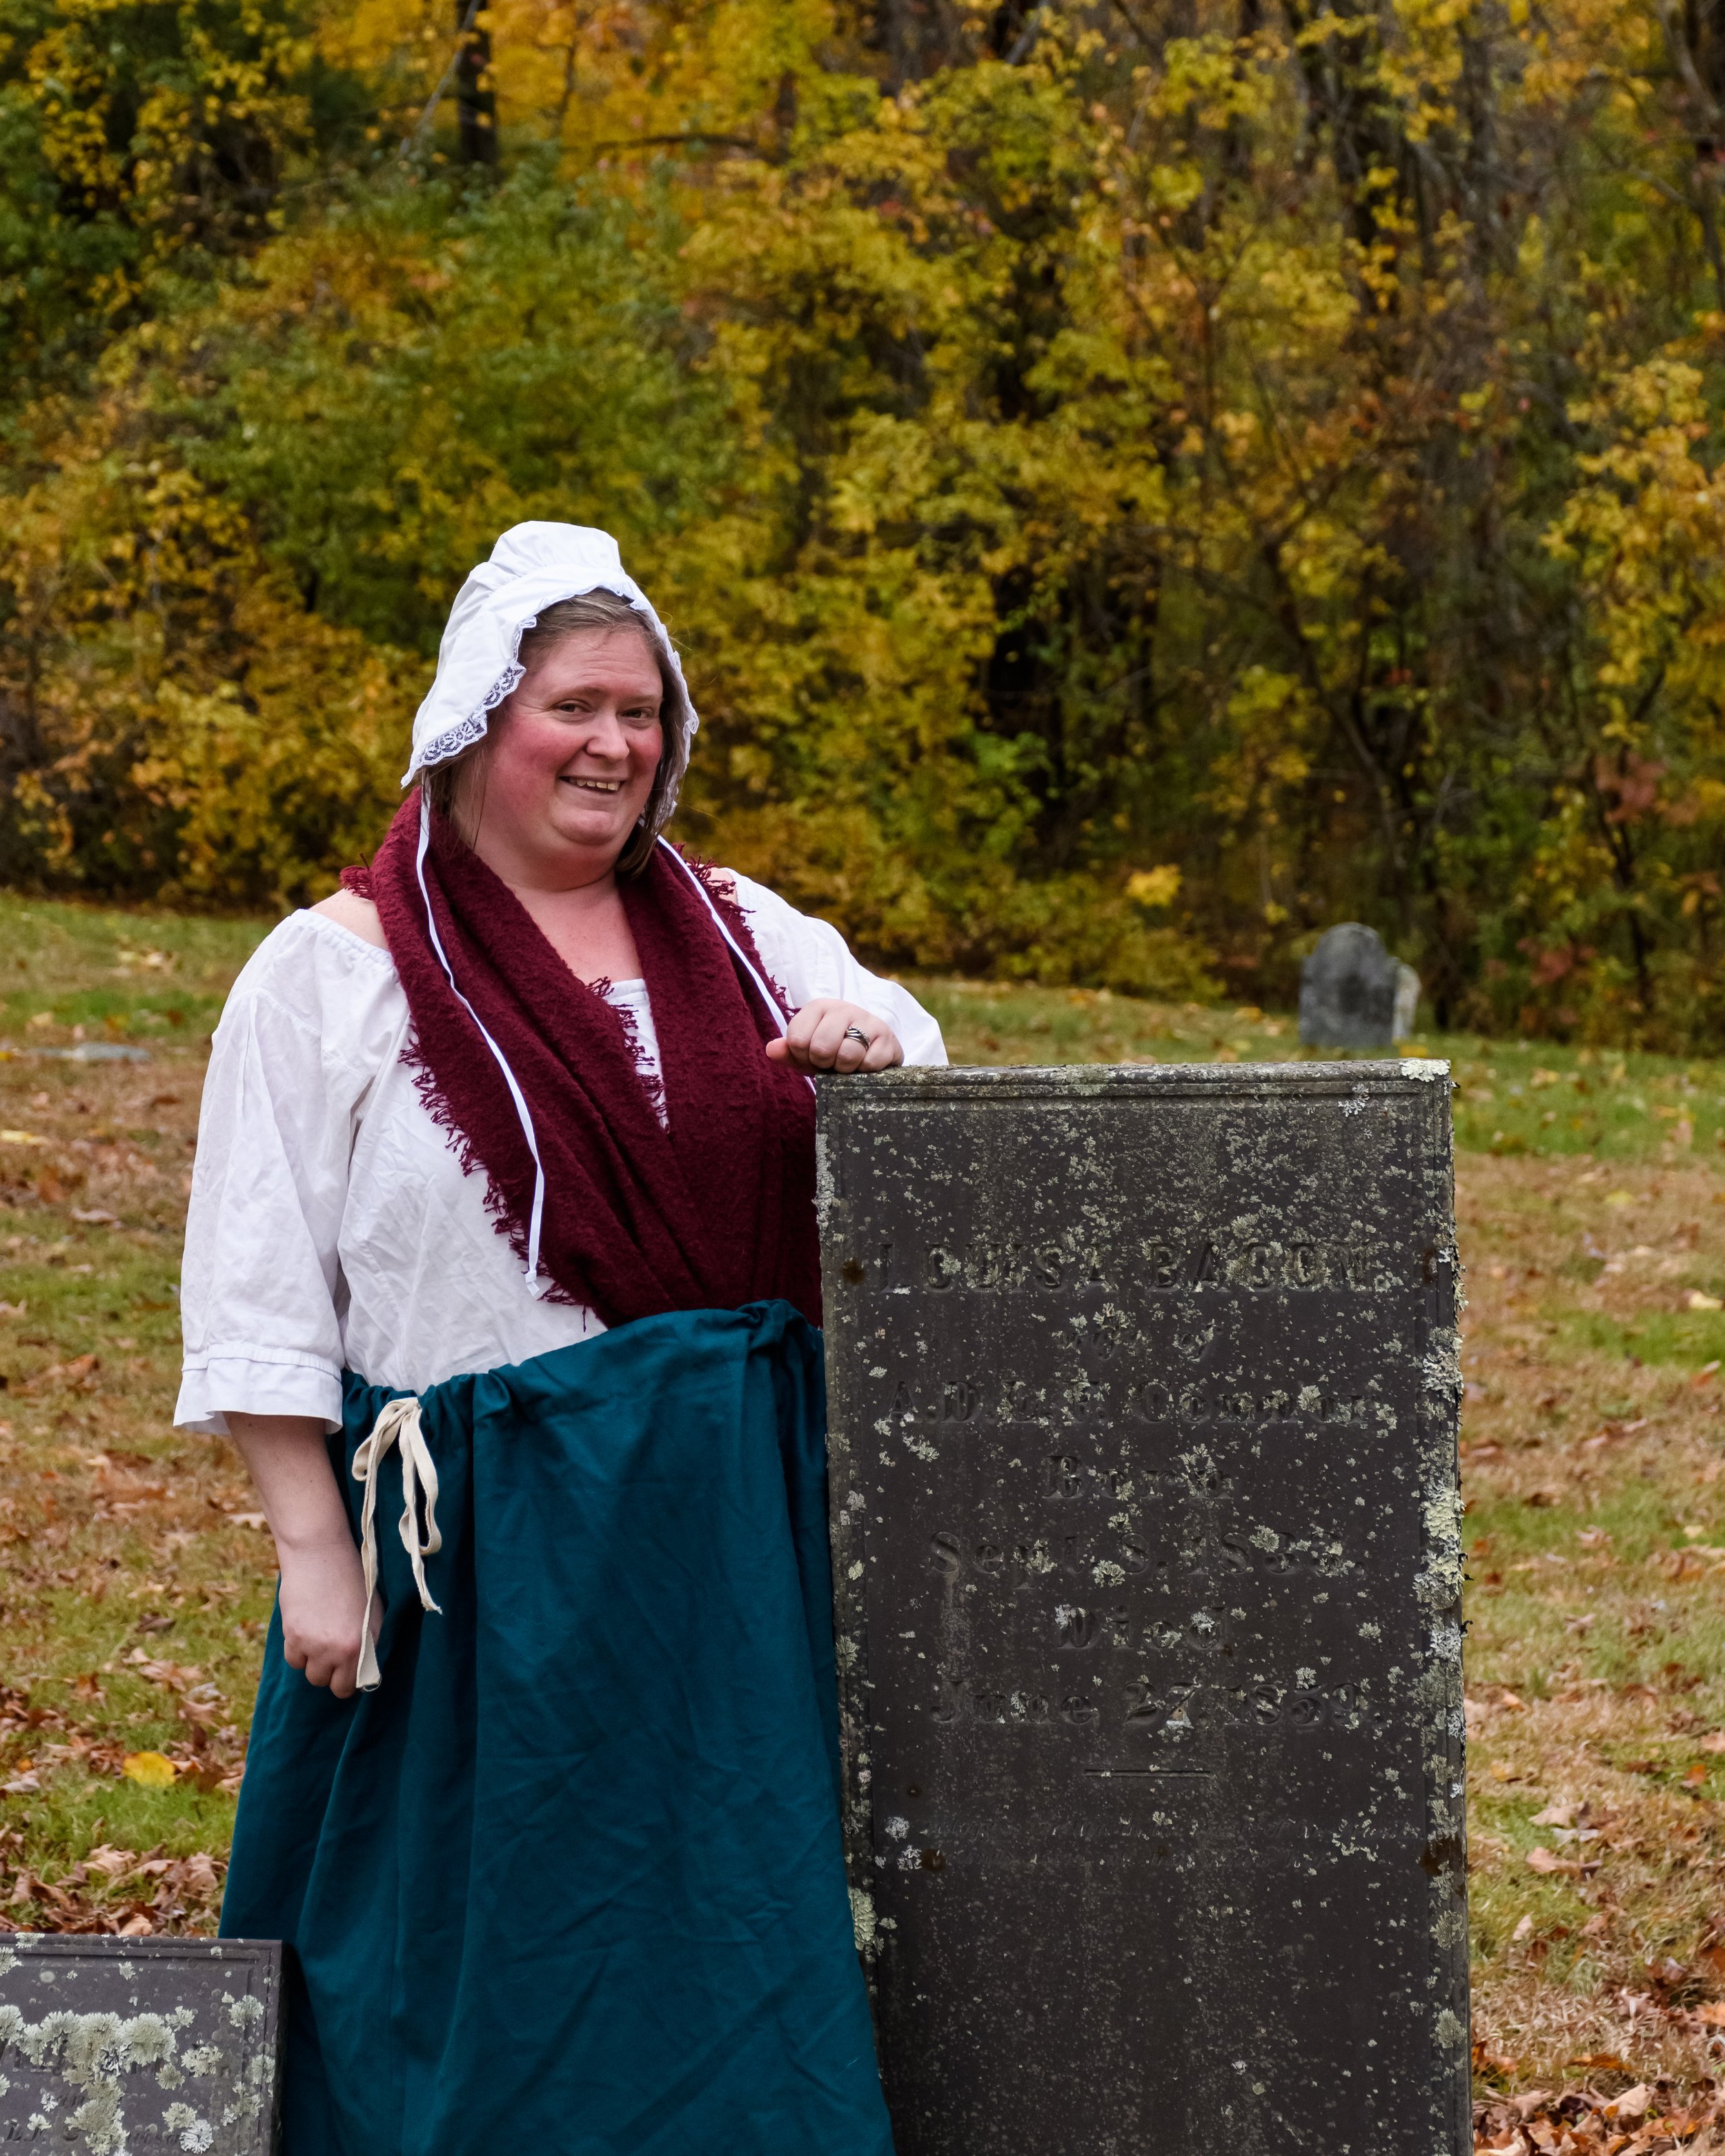  Mrs. Louisa Bacon Connor (aka Jennie Coburn-Valley), wife of ADLF Connor, cemetery caretaker. 